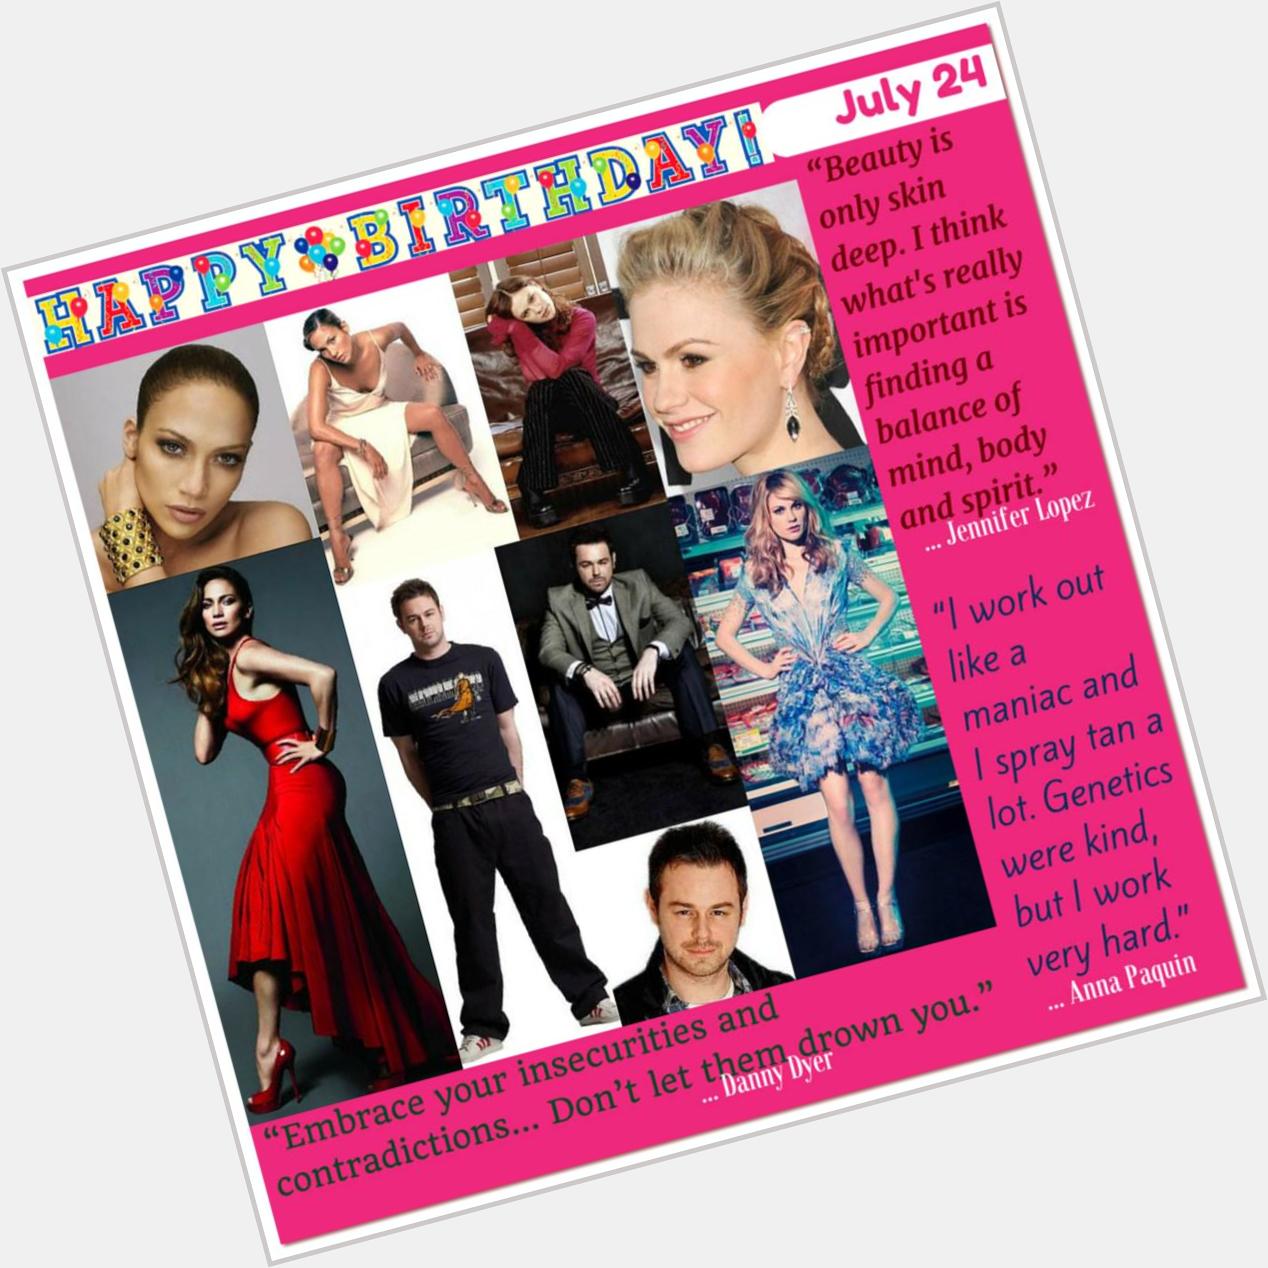 Happy Birthday Danny Dyer, Jennifer Lopez & Anna Paquin - July 24 Events  